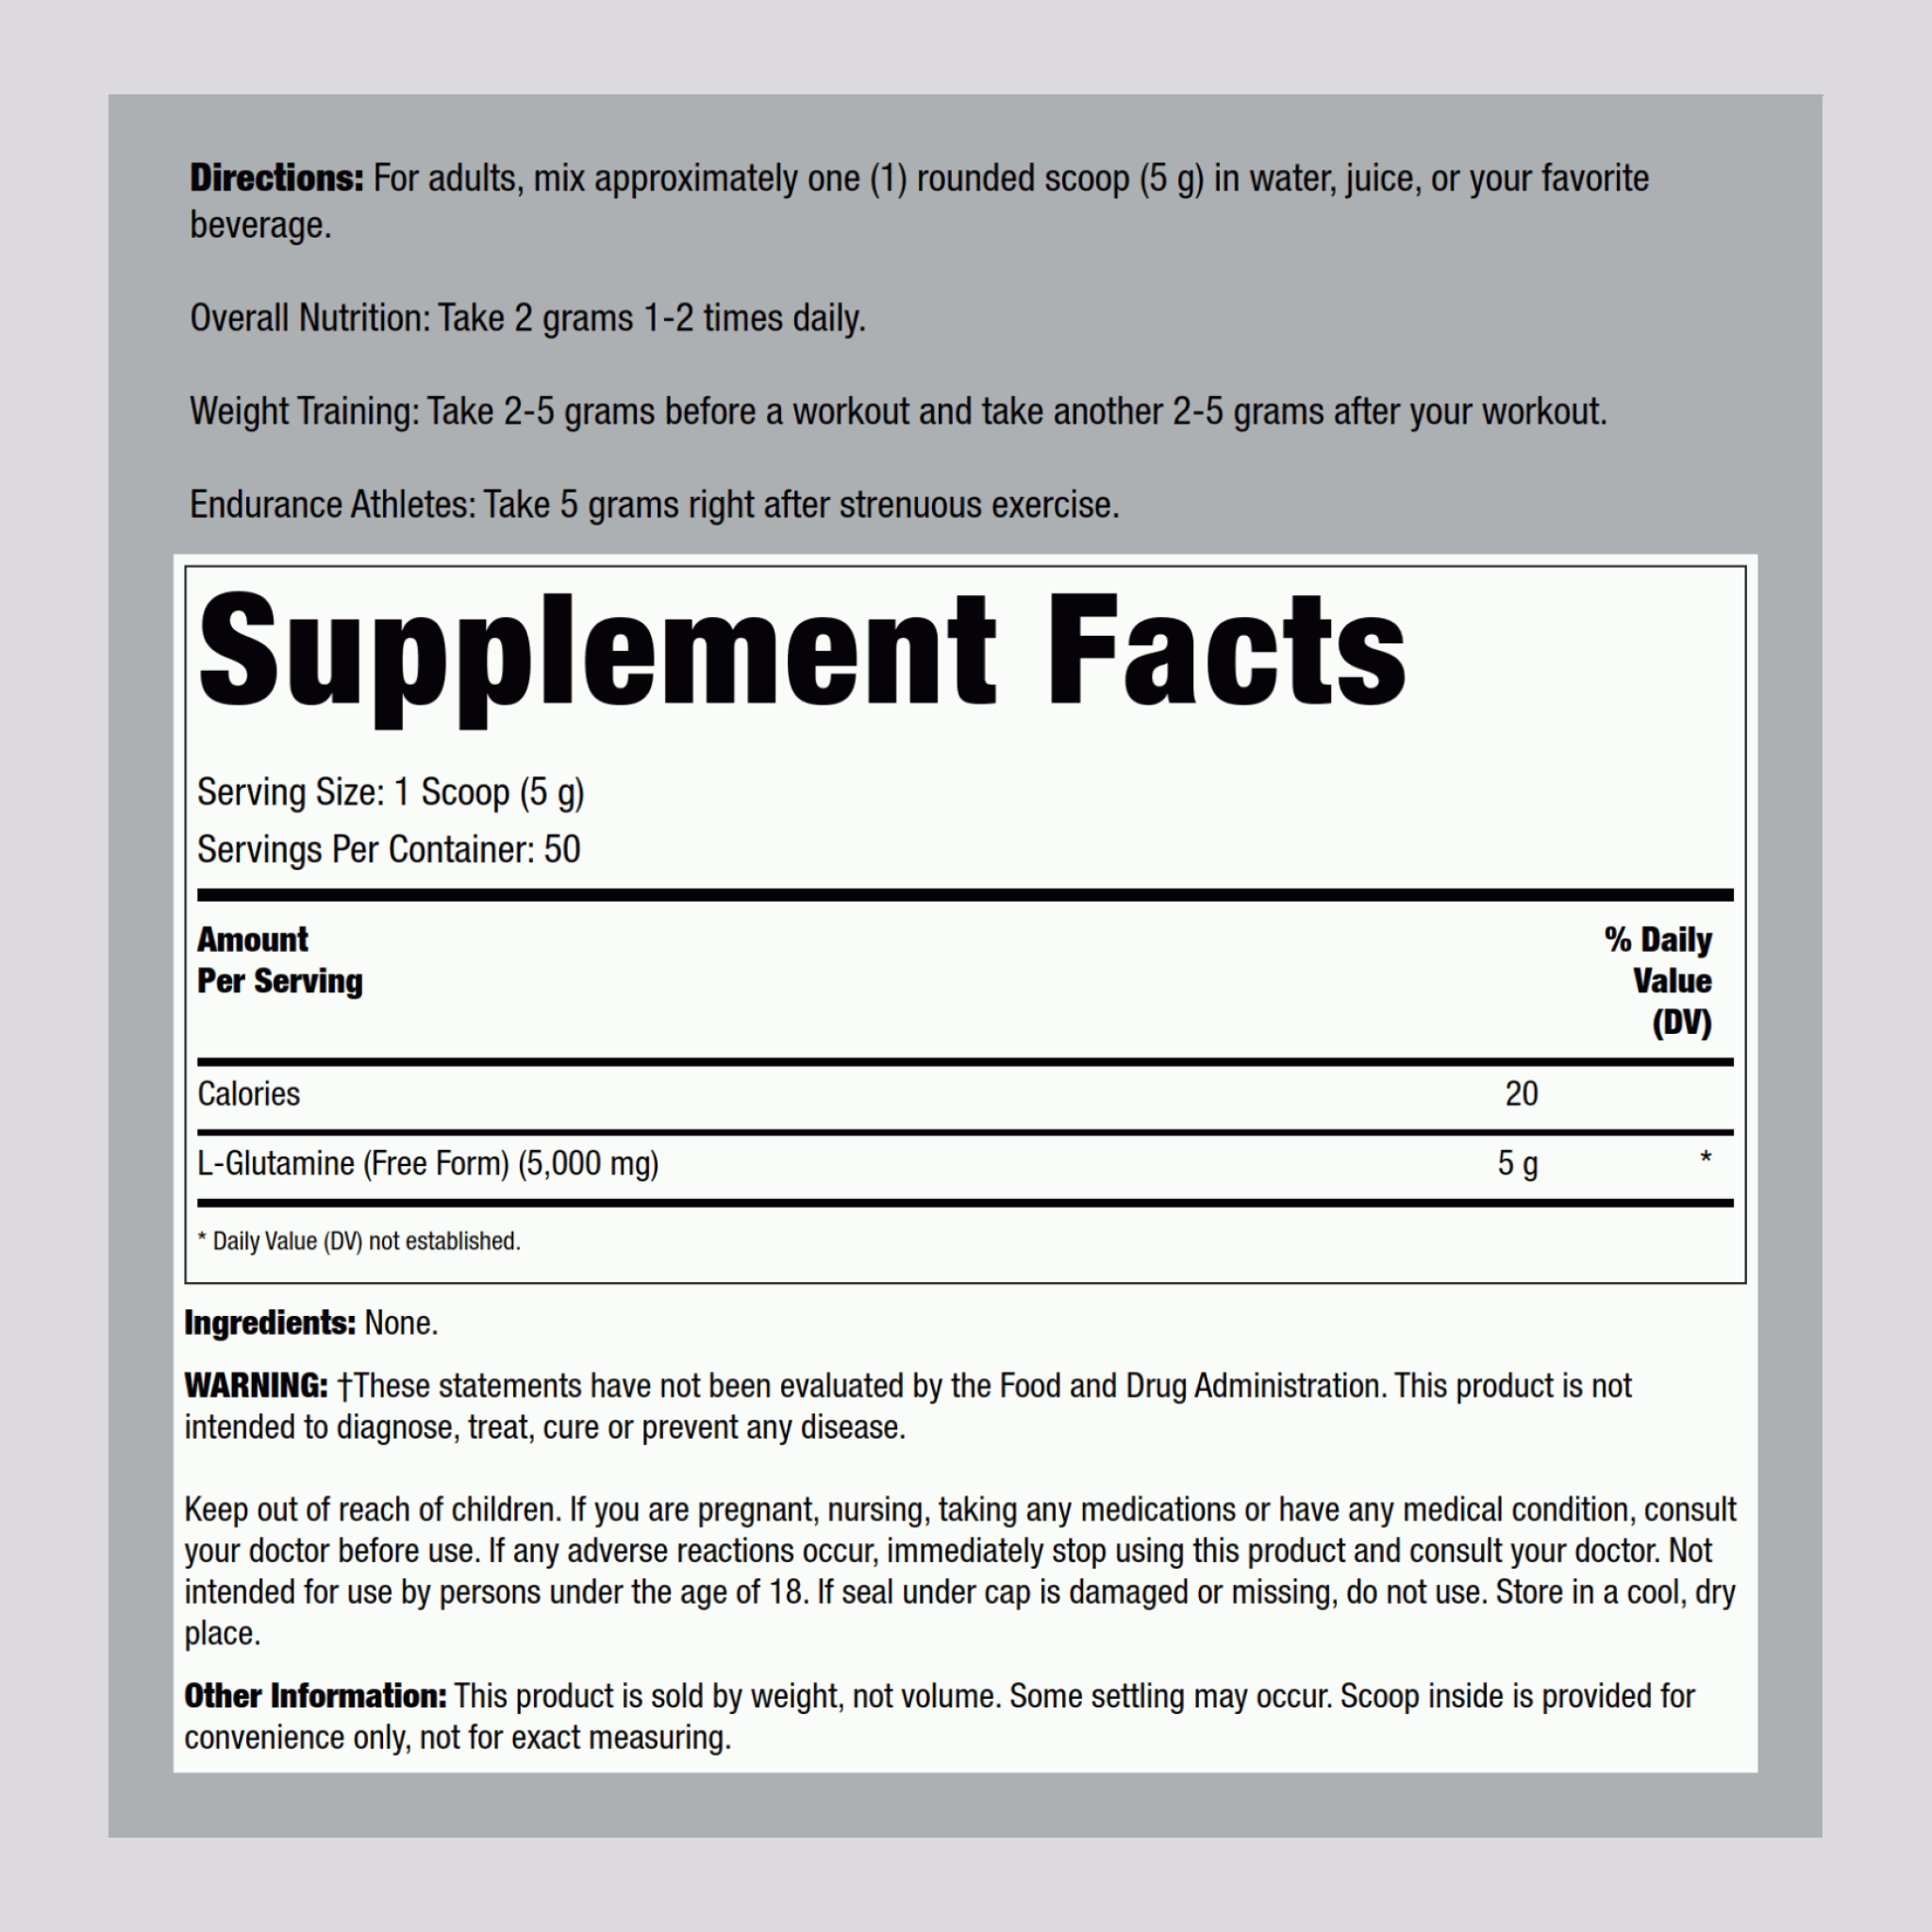 L-Glutamine Powder, 5000 mg, 250 g (8.82 oz) Bottle